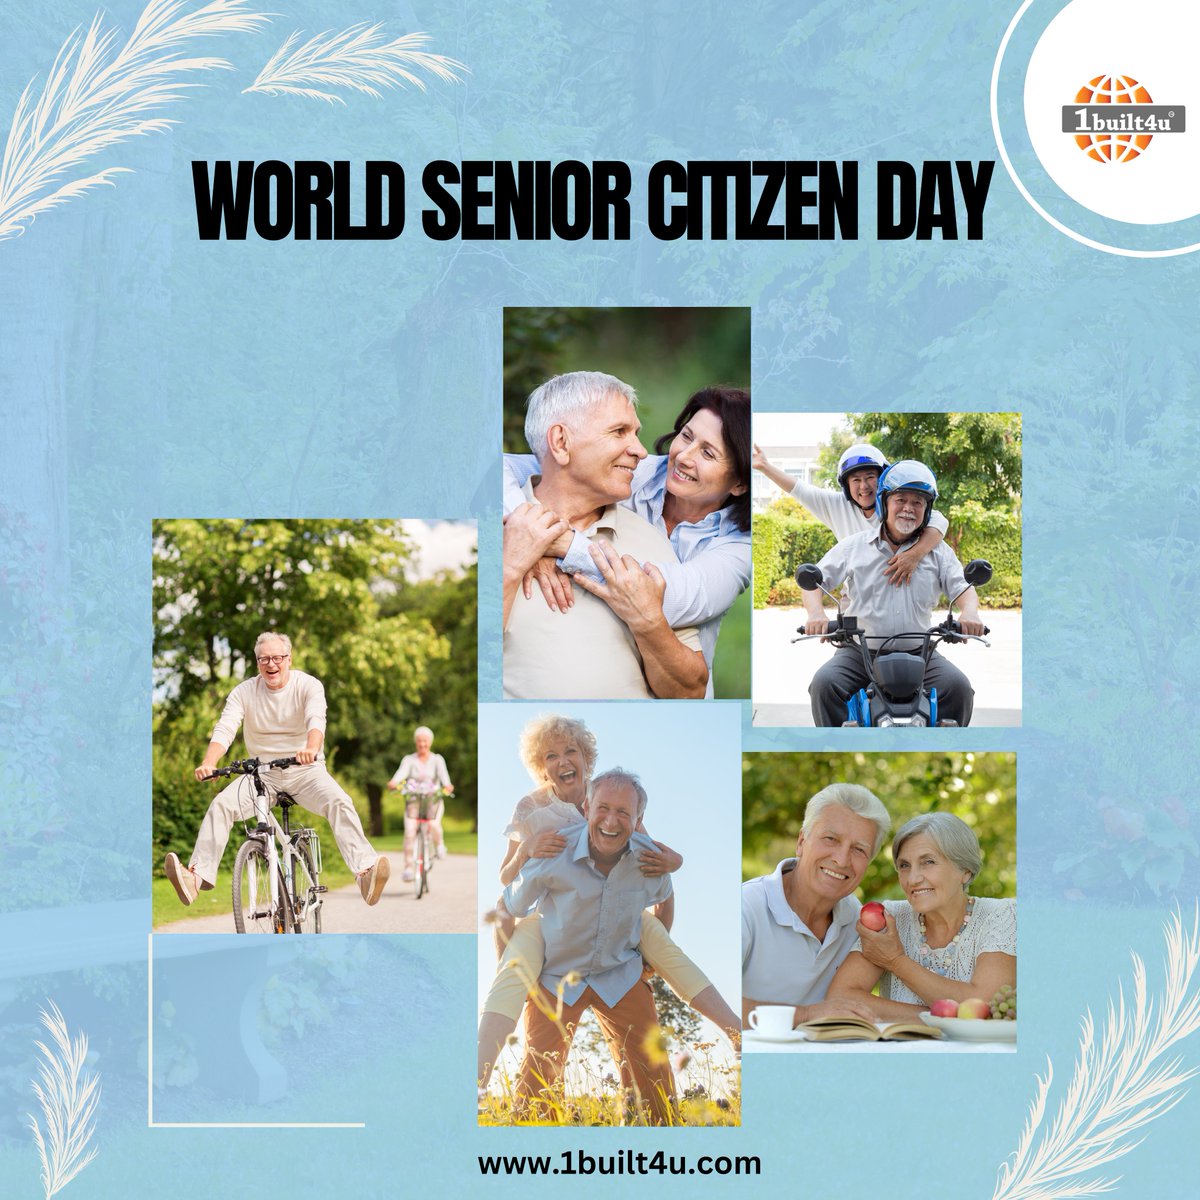 'Every wrinkle tells a story, and we celebrate those stories today. Happy World Senior Citizen Day!'

#1built4udotcom
#1built4u
#WorldSeniorCitizenDay #RespectElders #WisdomOfAge #ElderlyLove #GoldenYears #SeniorCitizensRock #AgeWithGrace #GenerationalWisdom #LegacyOfExperience